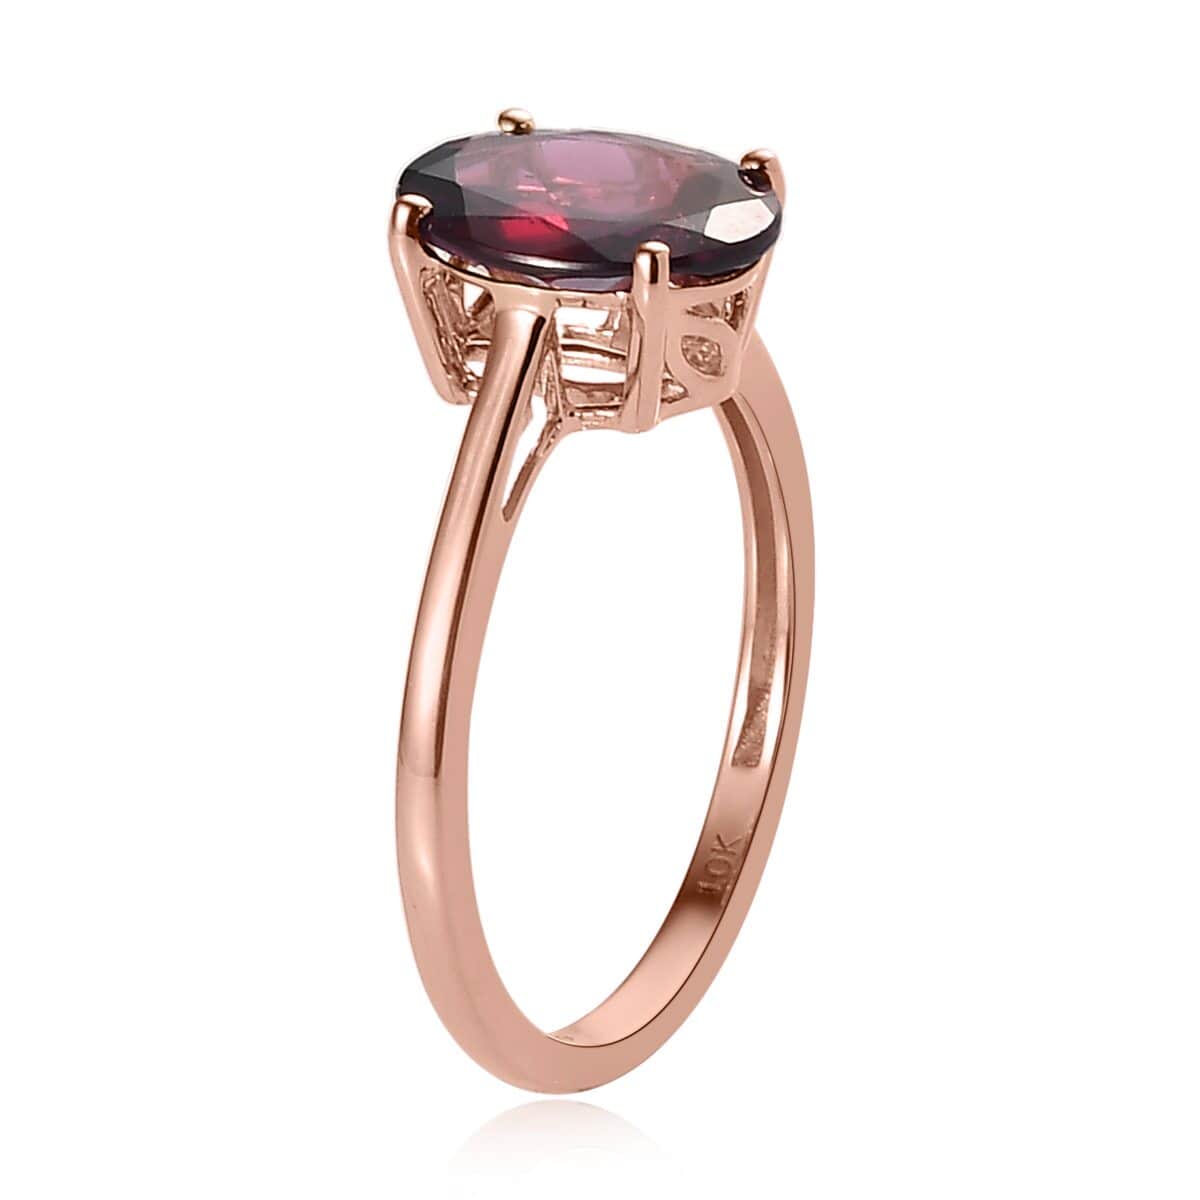 LUXORO 10K Rose Gold Premium Rhodolite Garnet Solitaire Ring (Size 10.0) 2.90 ctw image number 3